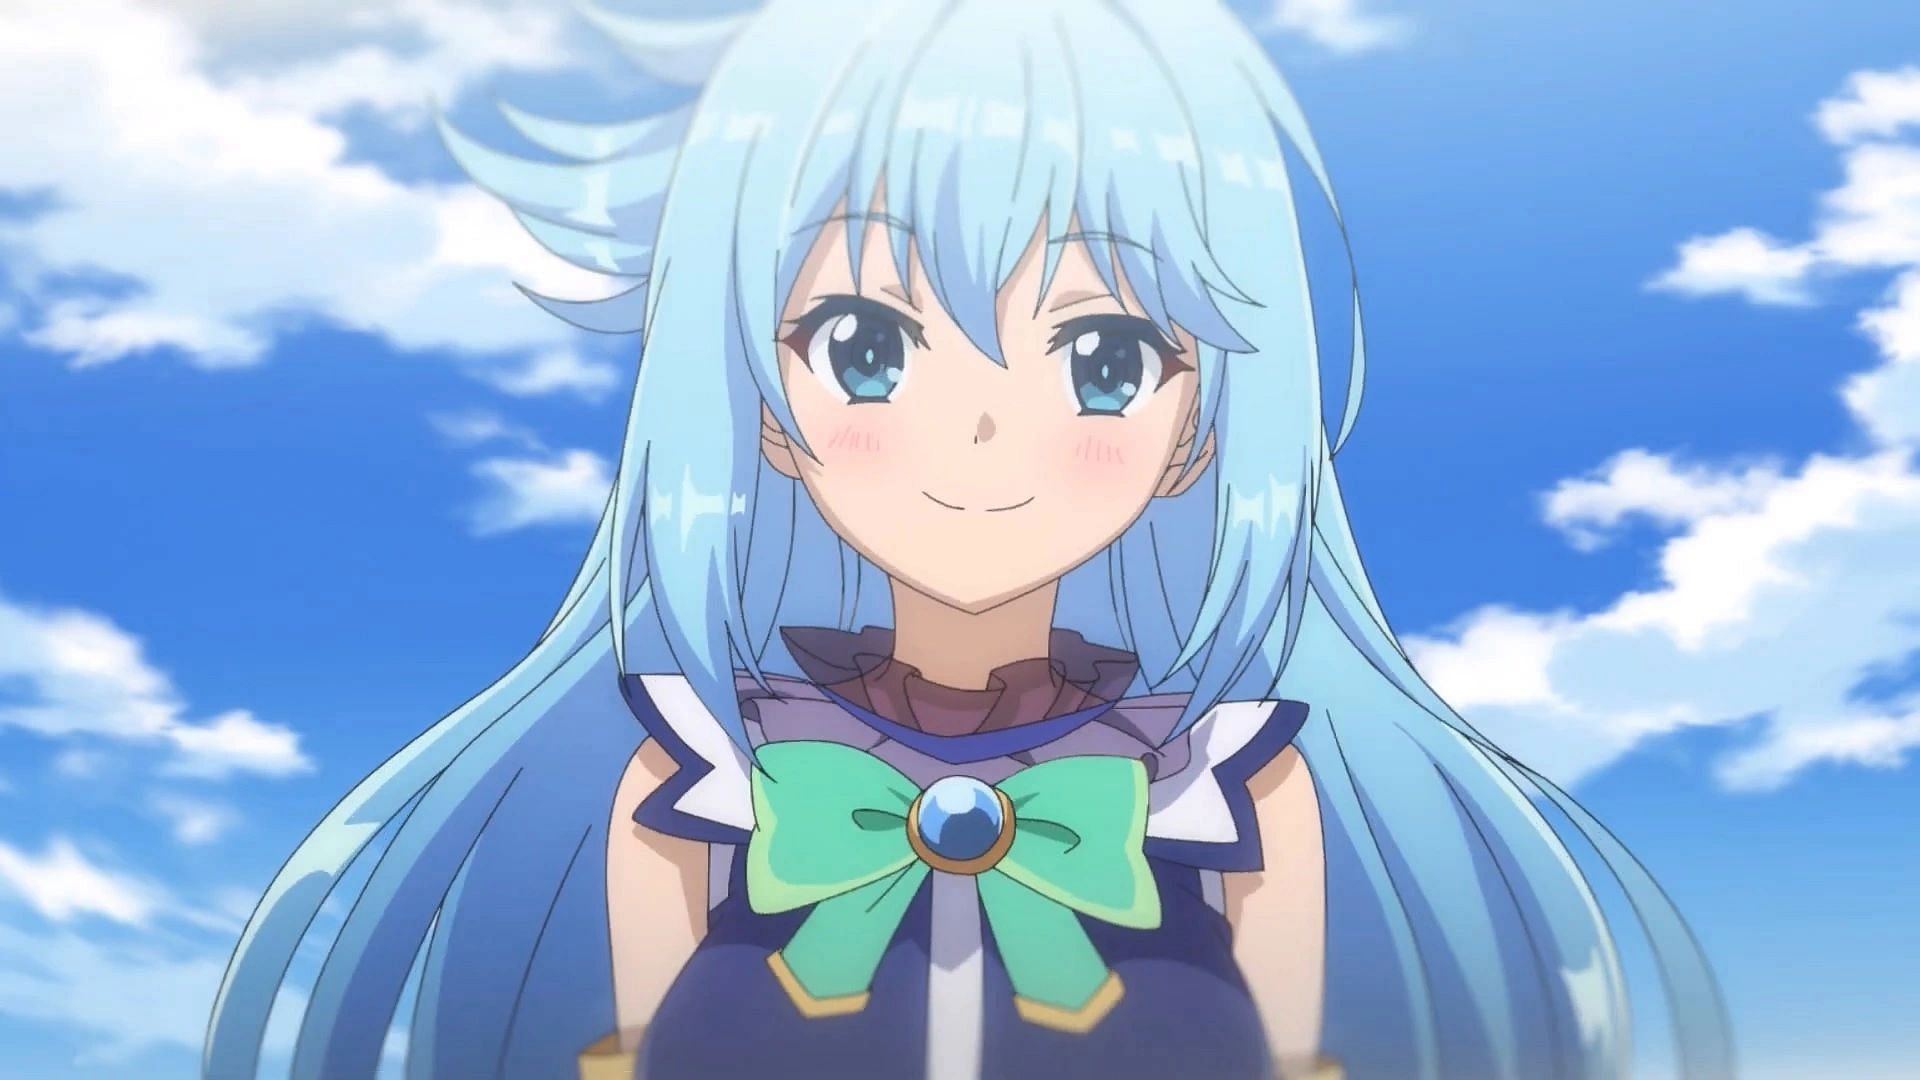 Aqua, as seen in the KonoSuba anime series (image via Studio Deen)